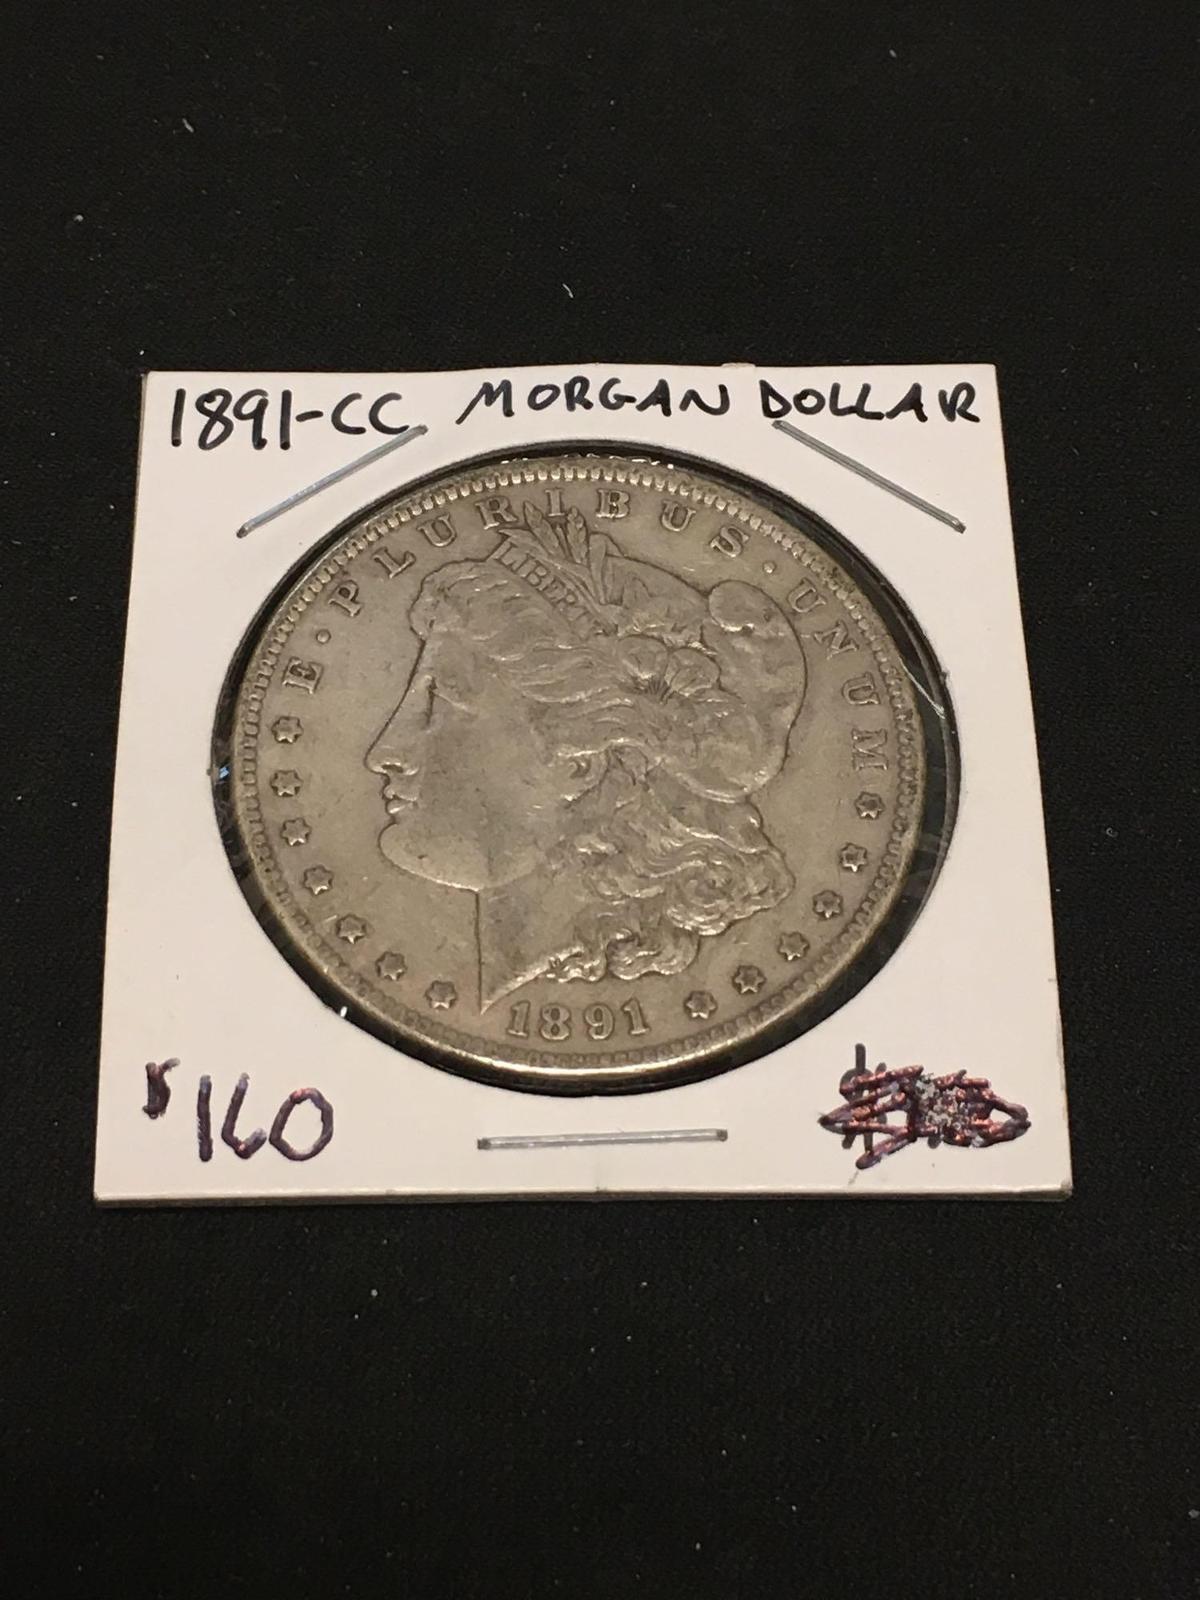 RARE 1891-CC United States Morgan Silver Dollar - 90% Silver Coin